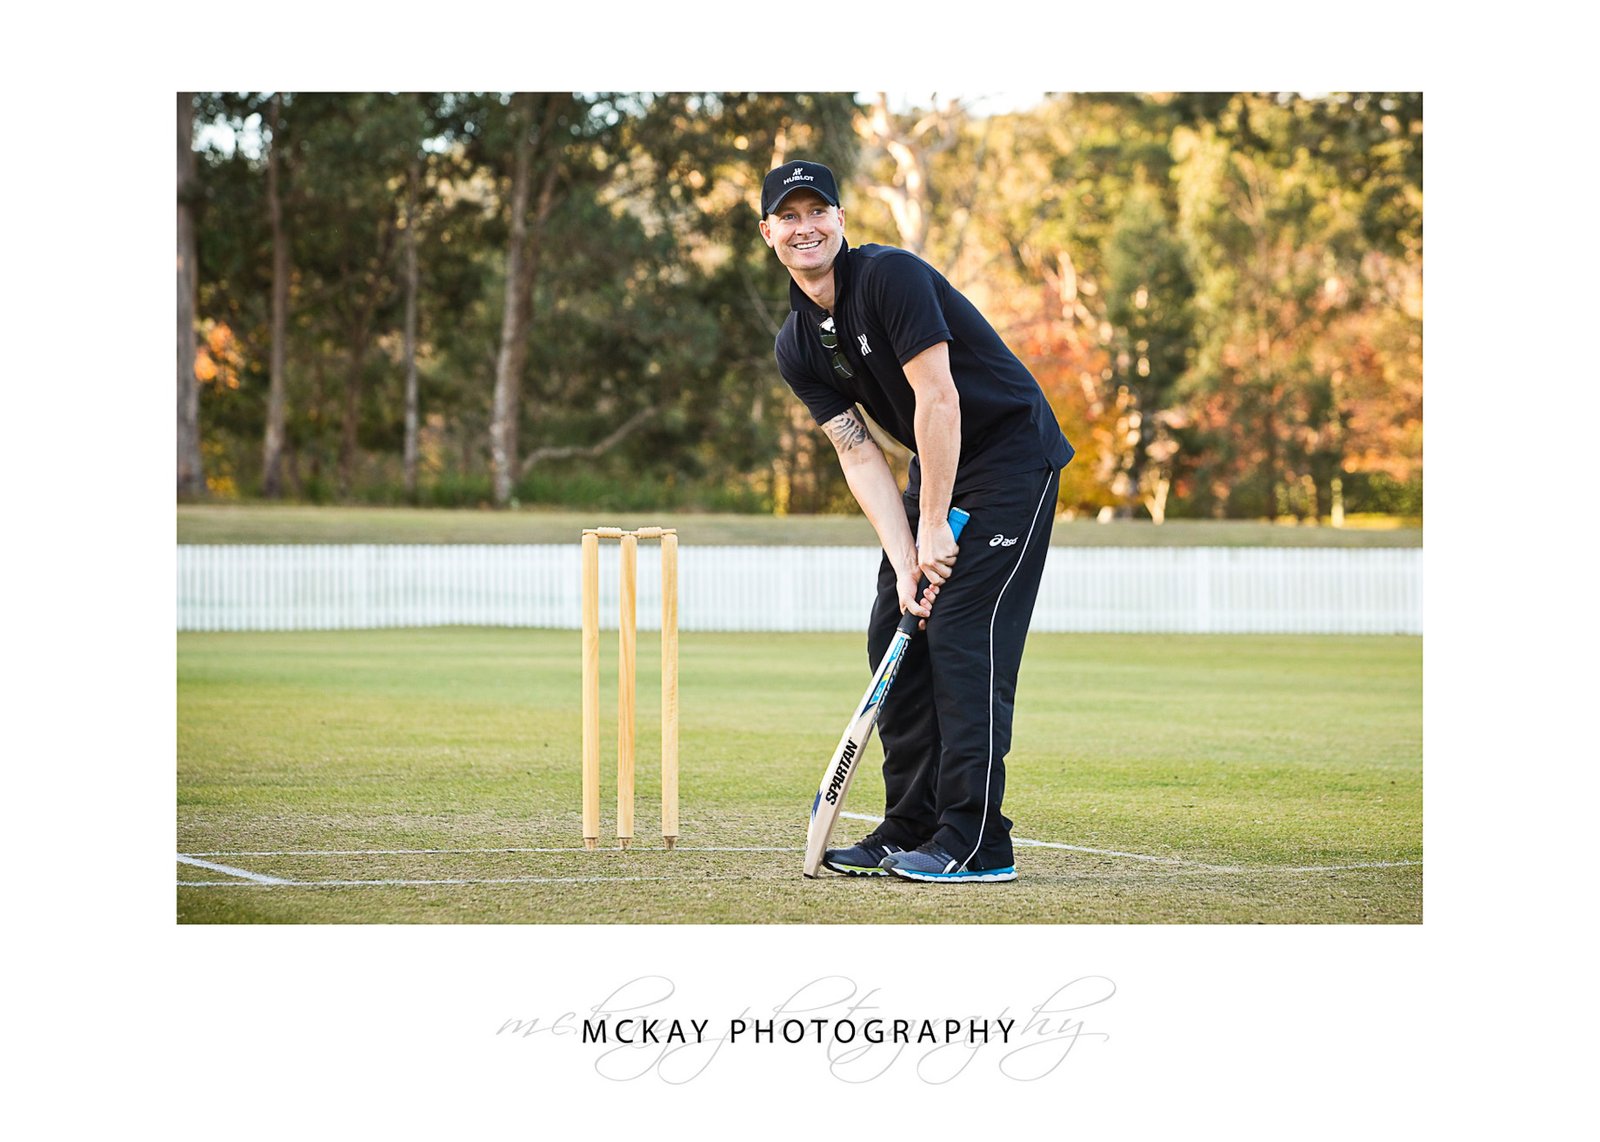 Michael Clarke playing cricket